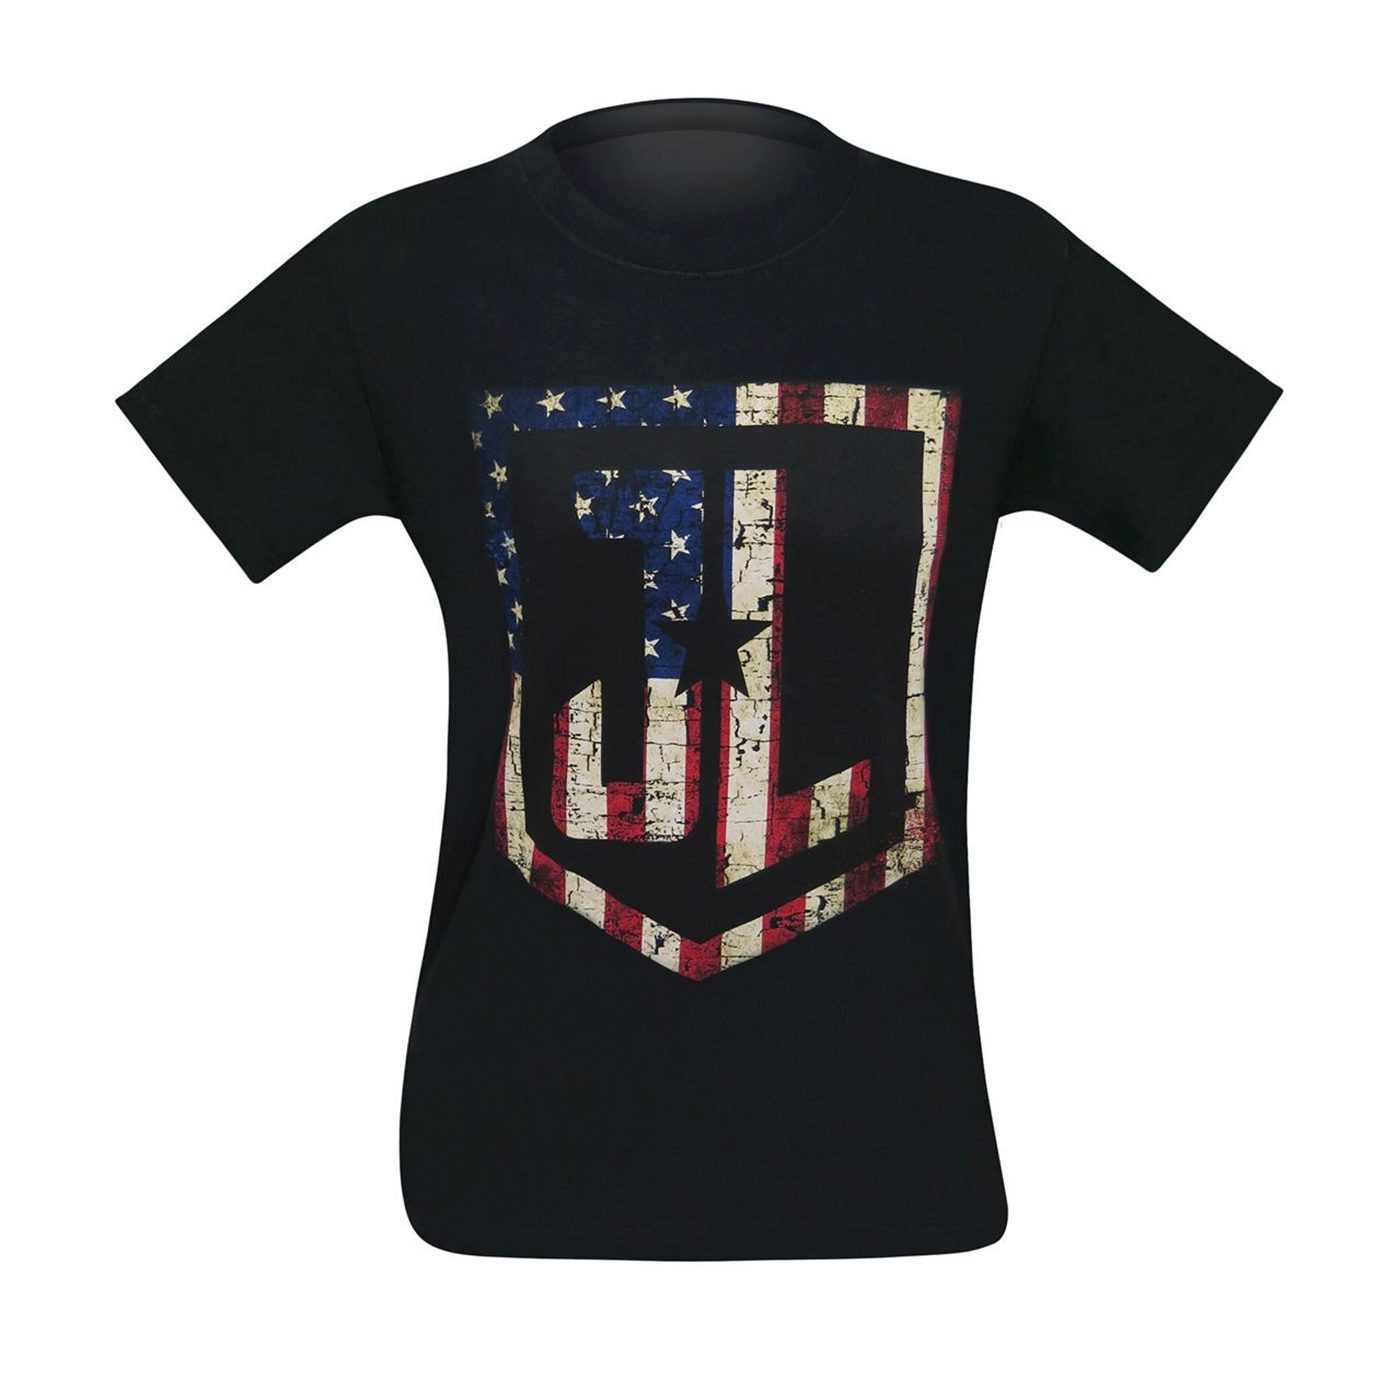 Justice League Movie American Flag Logo Men's T-Shirt